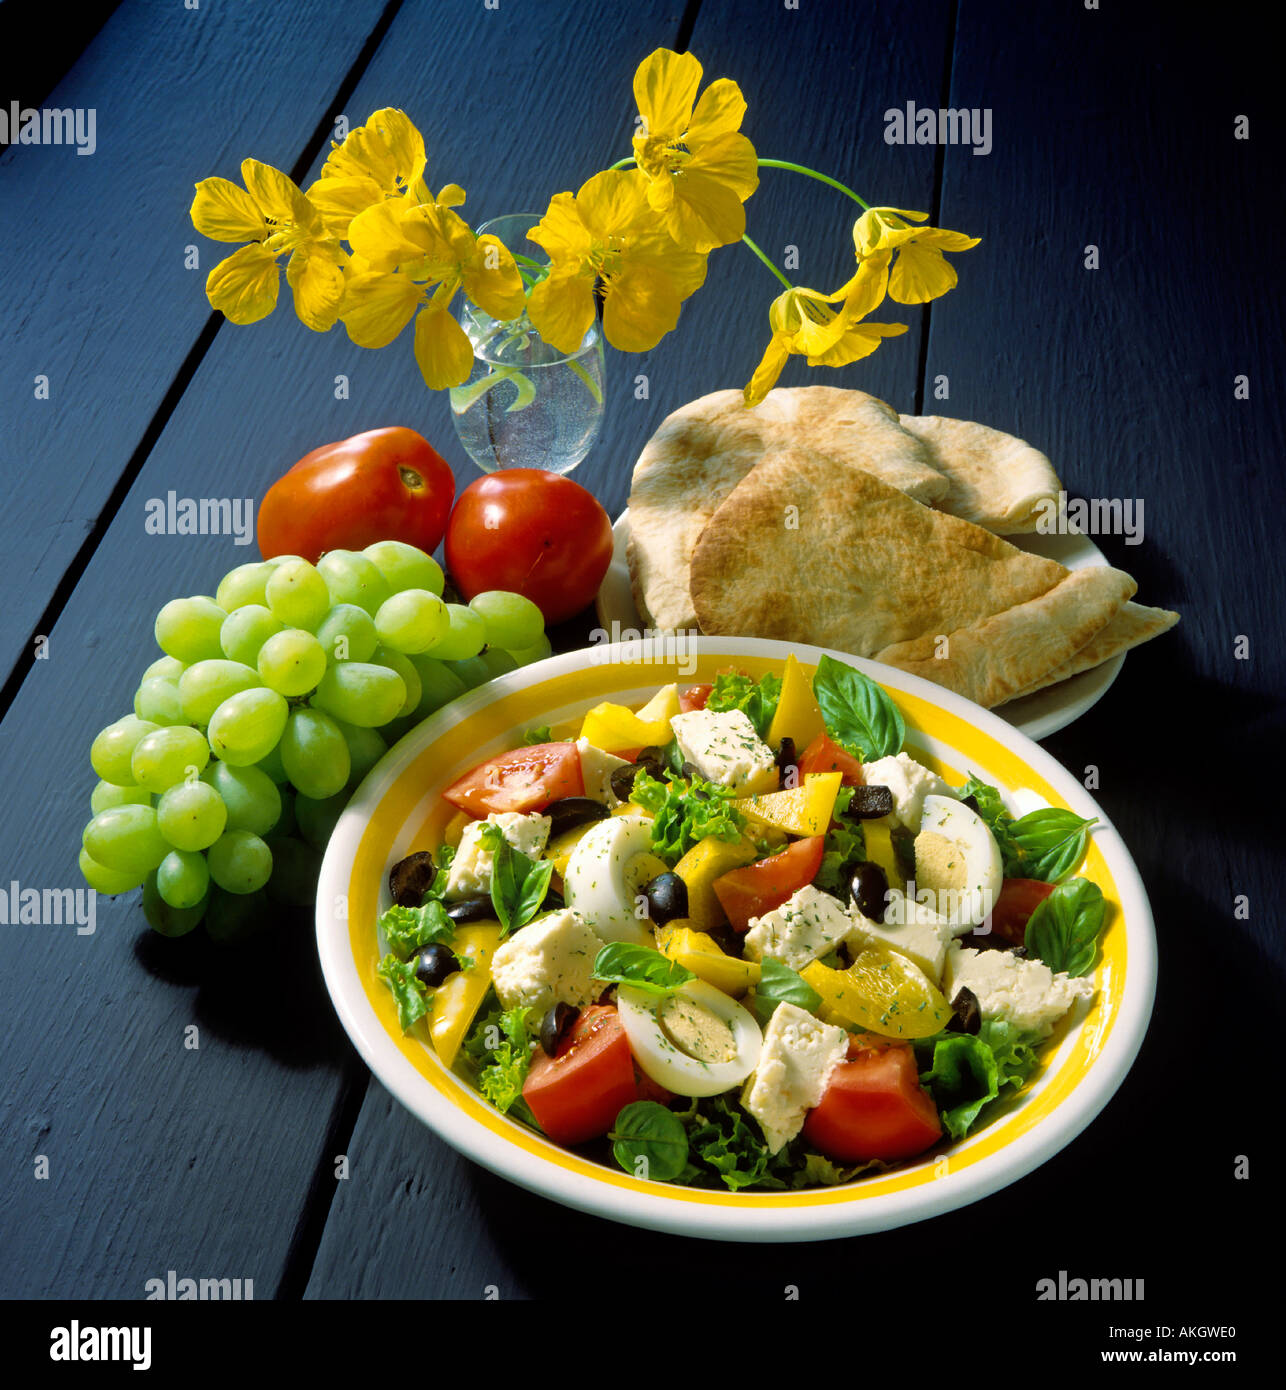 greek salad with feta cheese and pita bread Stock Photo